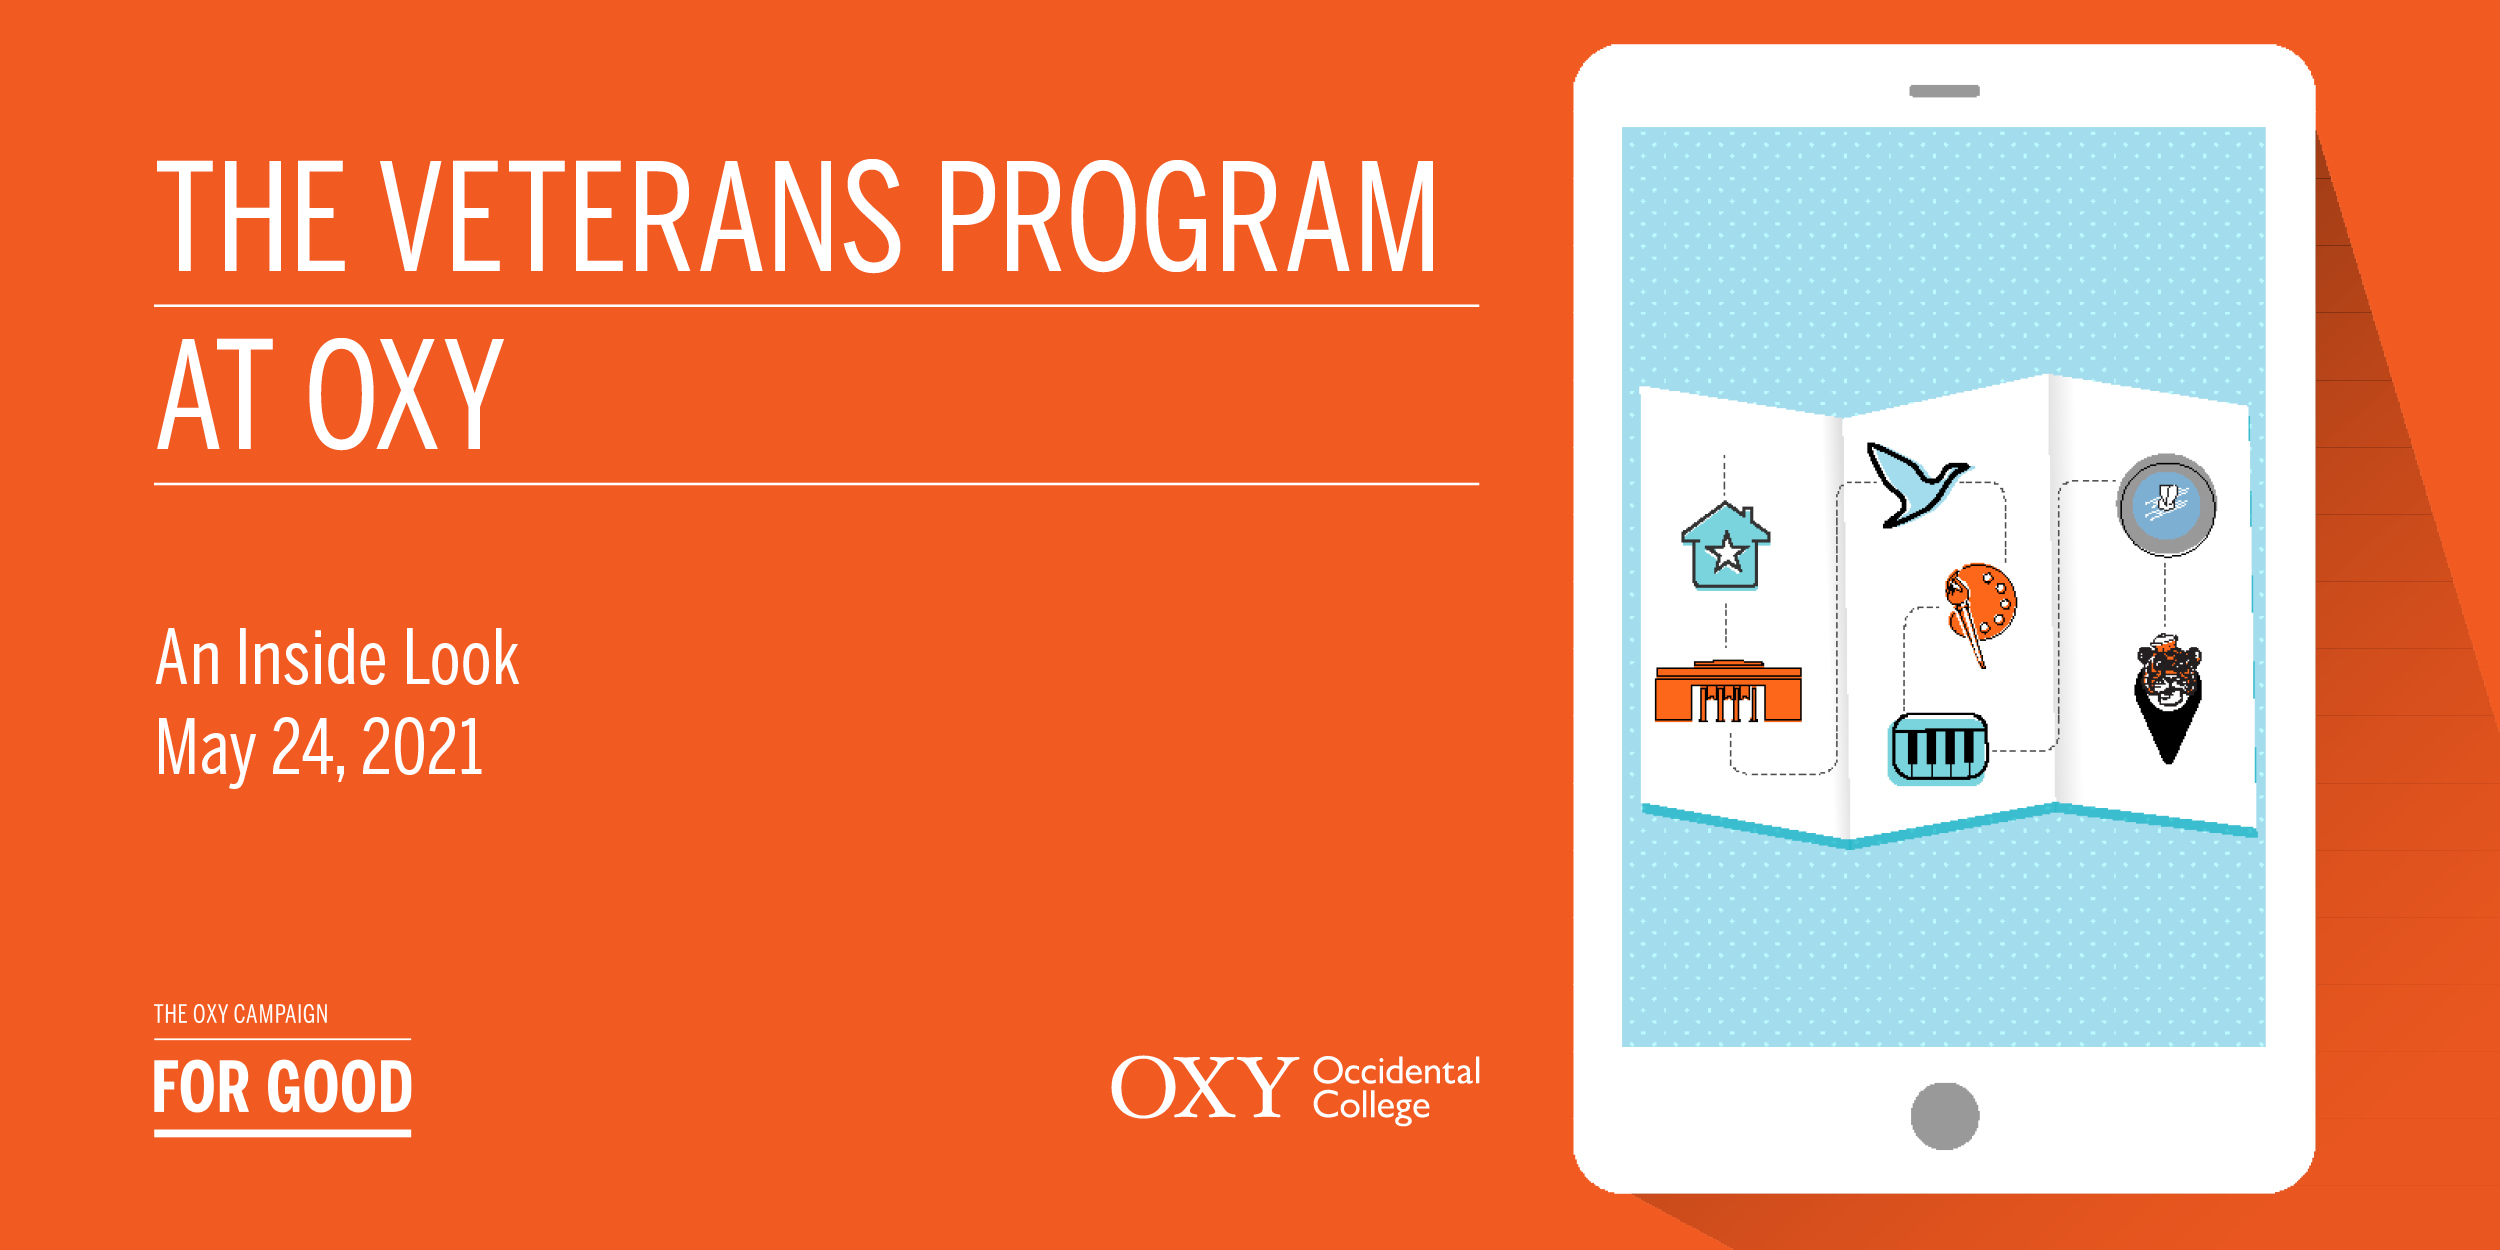 The Veterans Program at Oxy